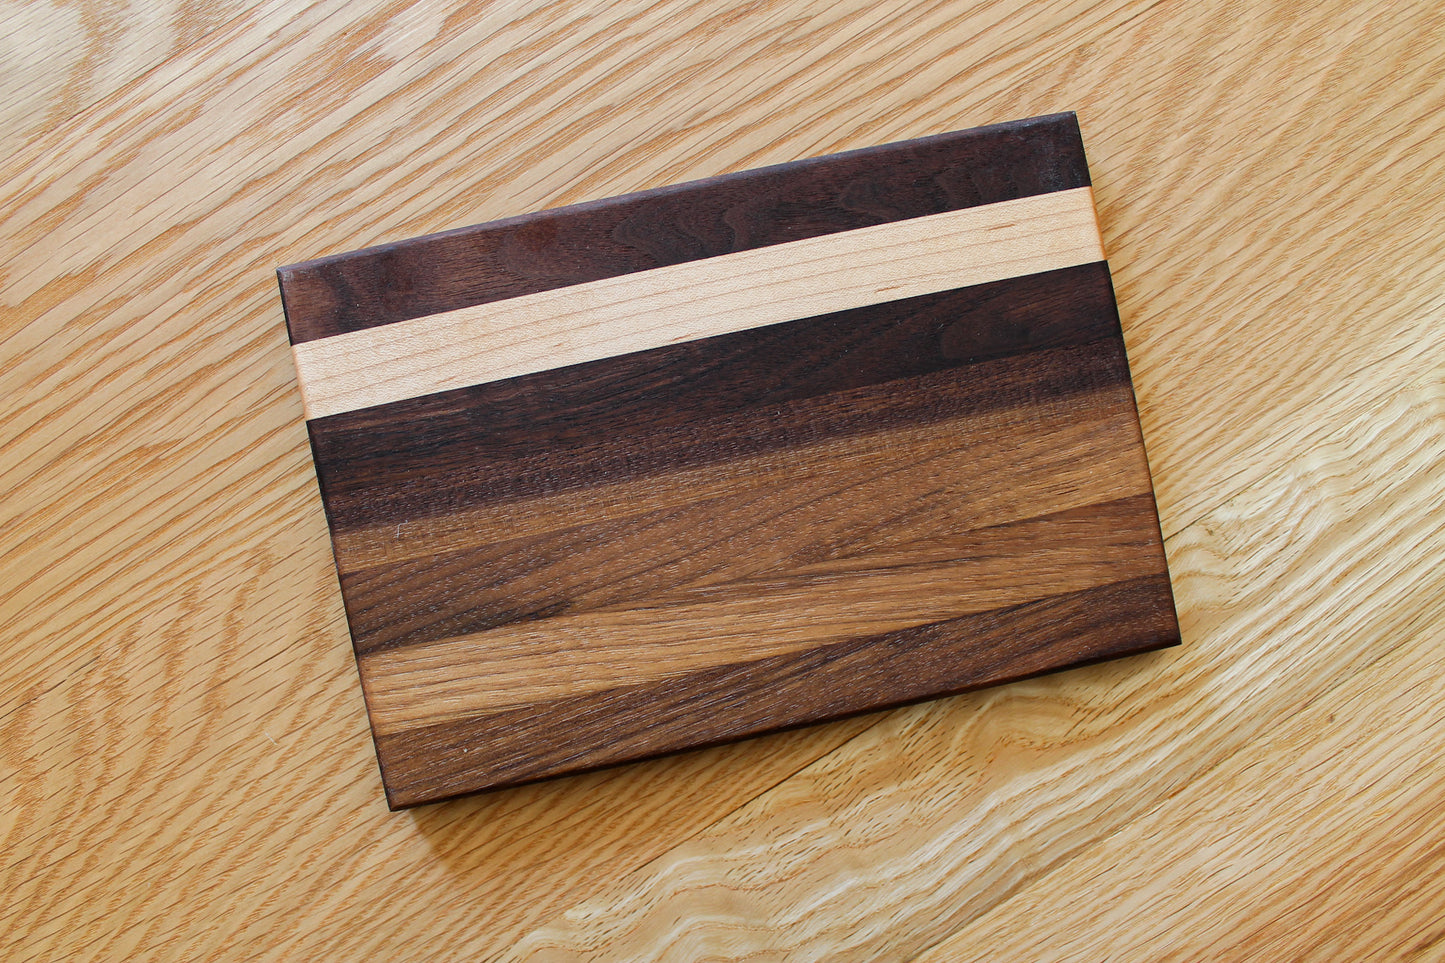 Top Stripe Bar Board | Small Cutting Board for Small Jobs